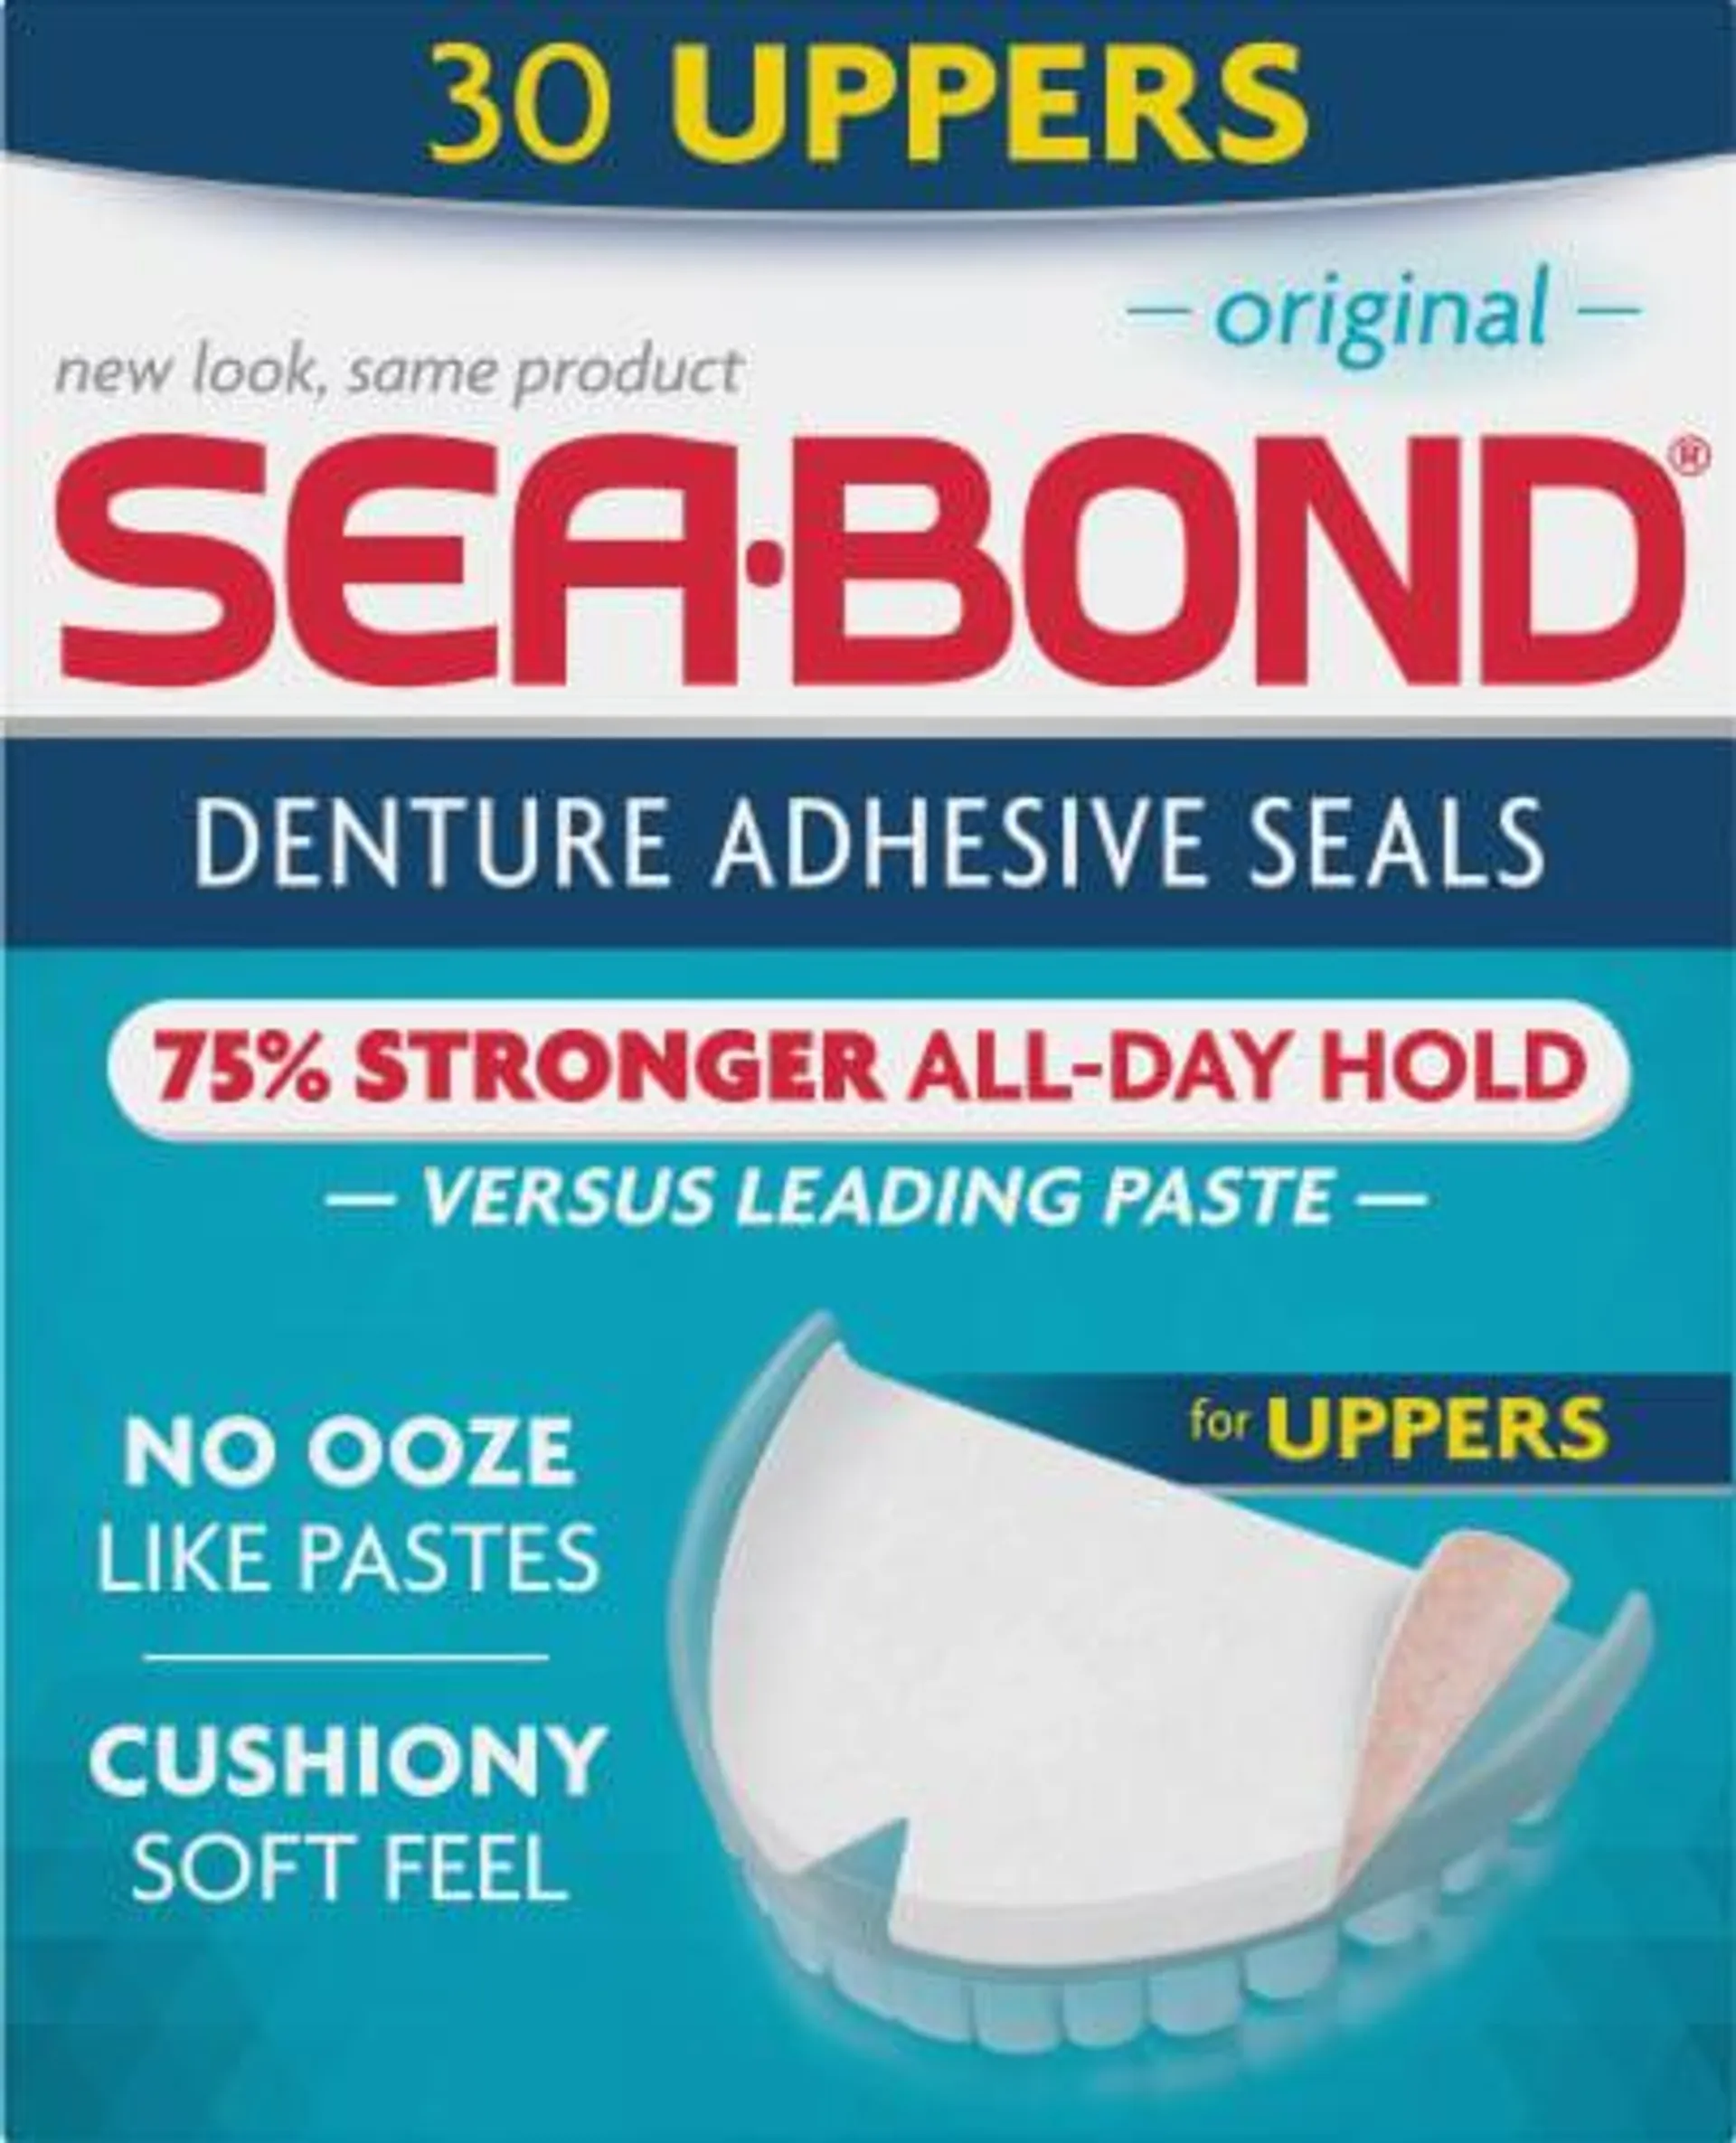 Sea-Bond Upper Adhesive Denture Seals, Original